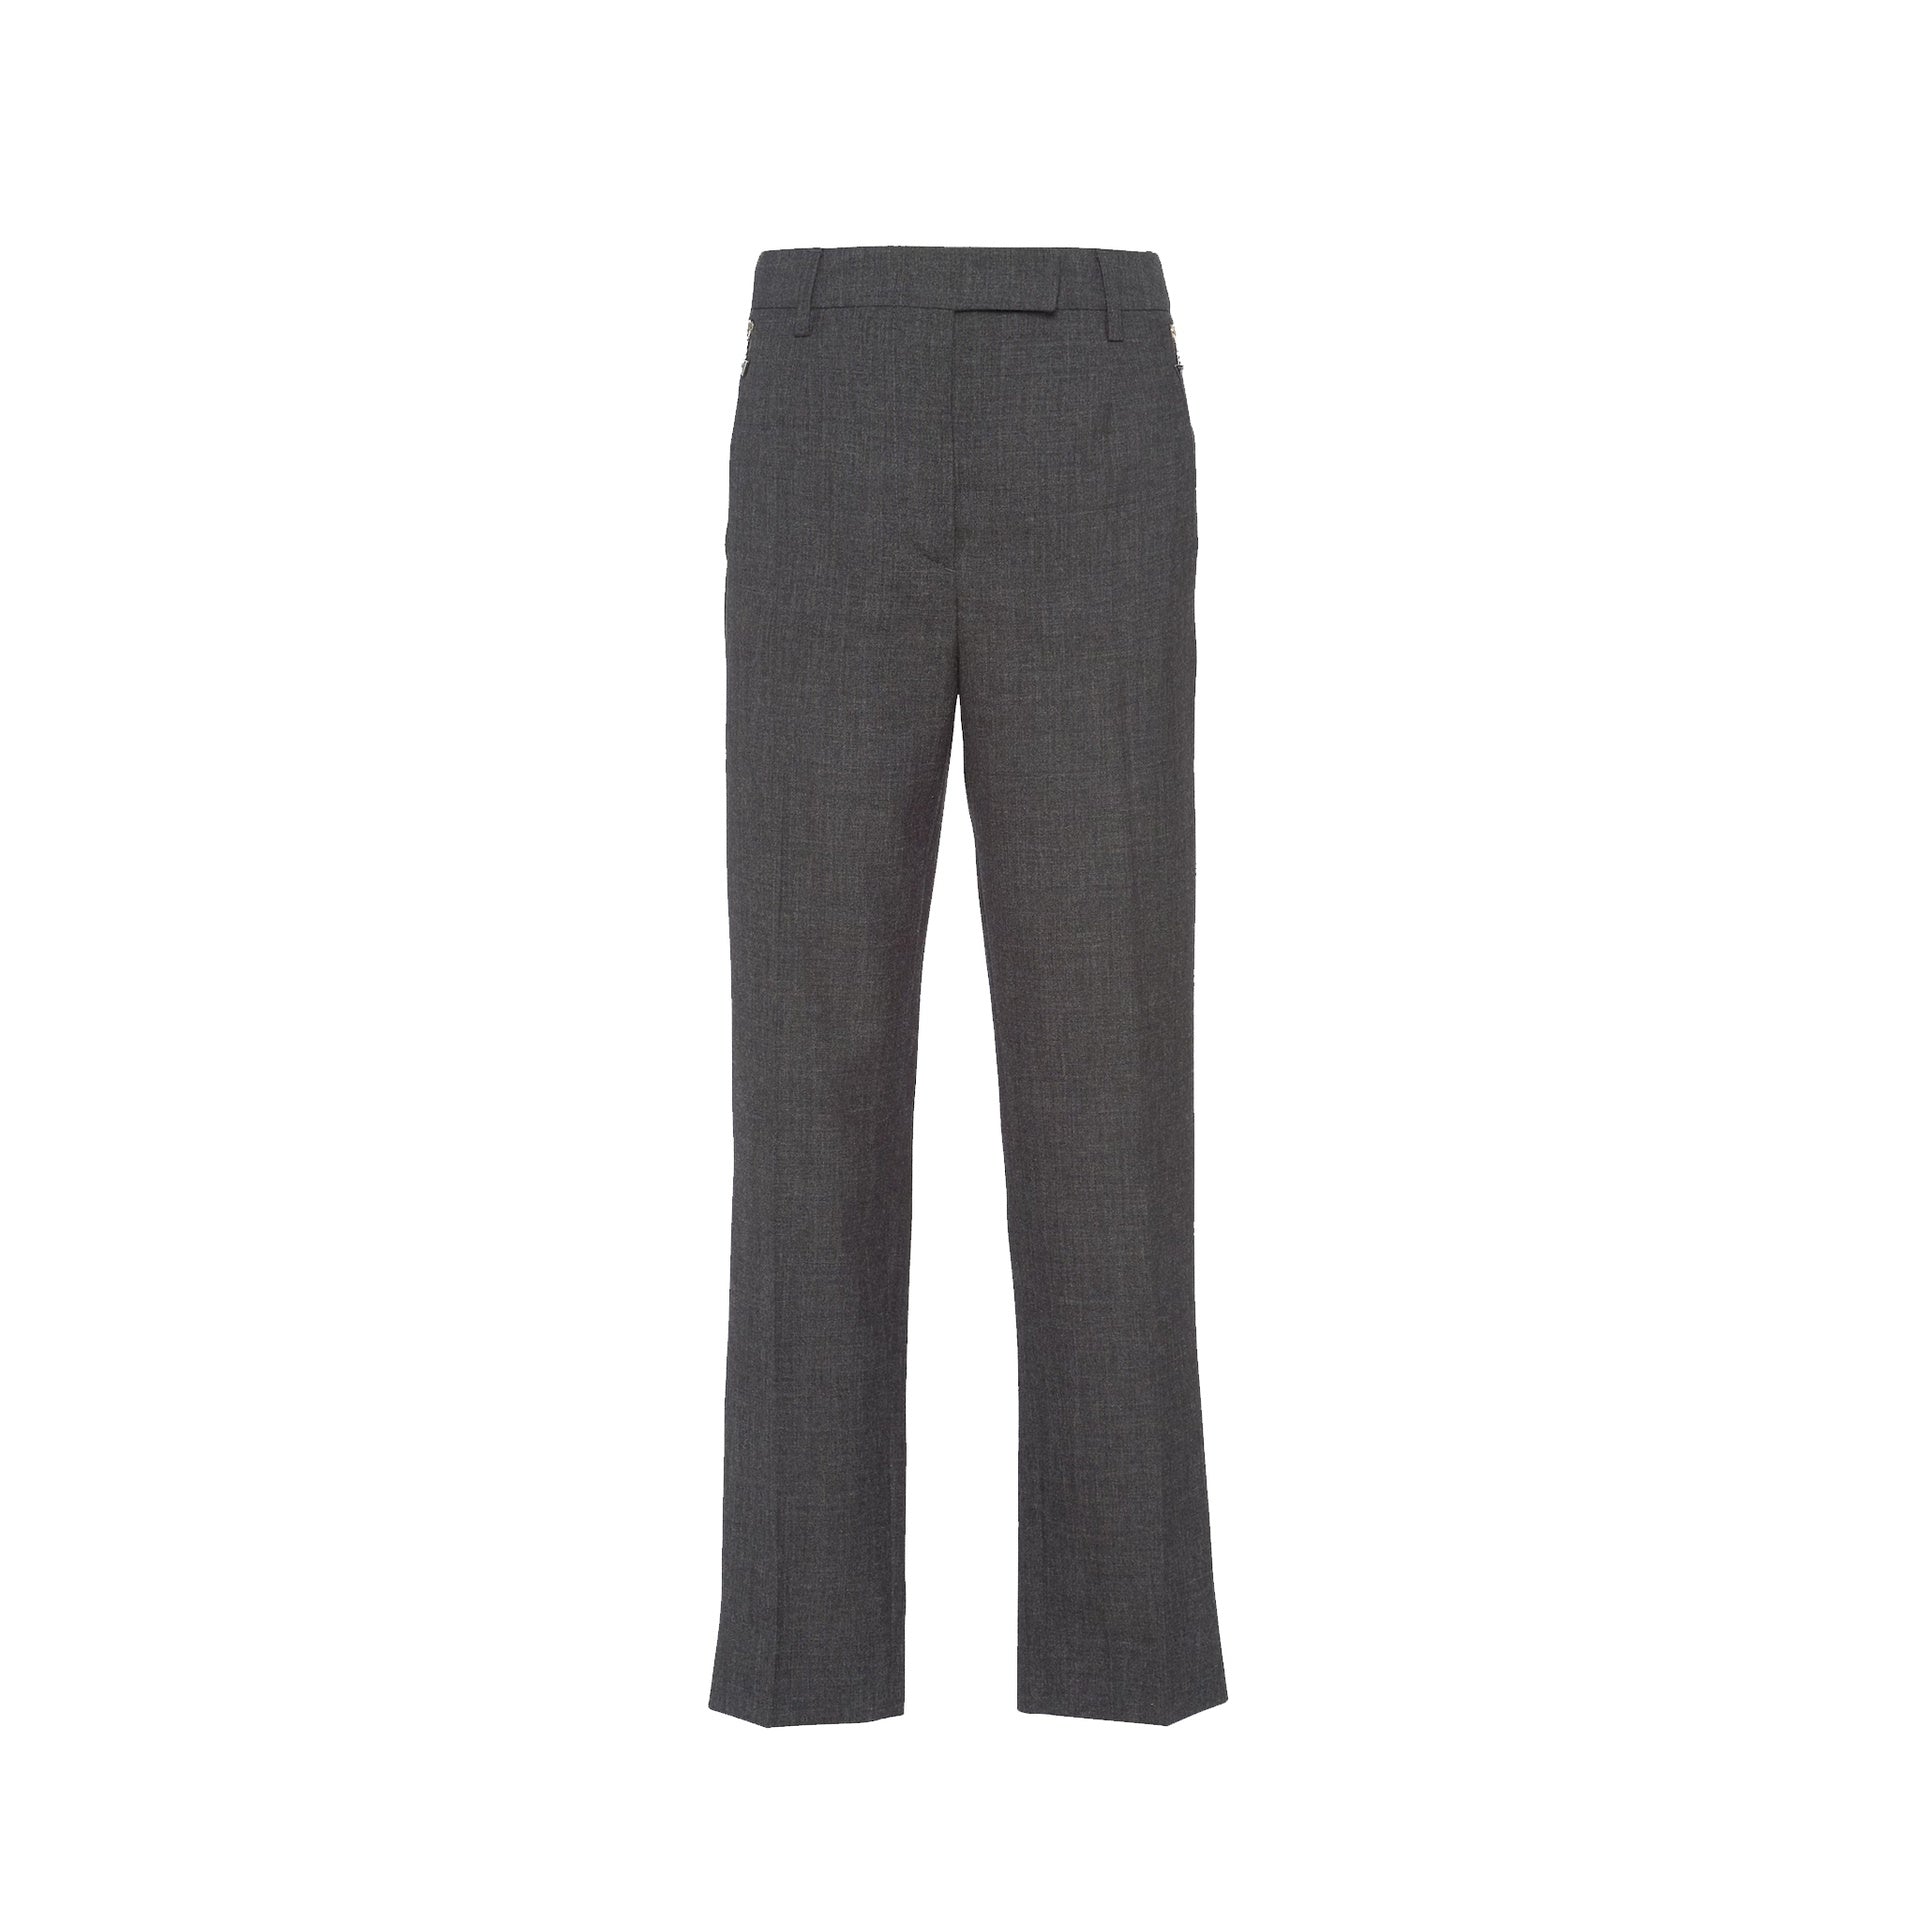 PRADA-Outlet-Sale-Prada Wool Pants-WOMEN CLOTHING-GREY-42-ARCHIVIST